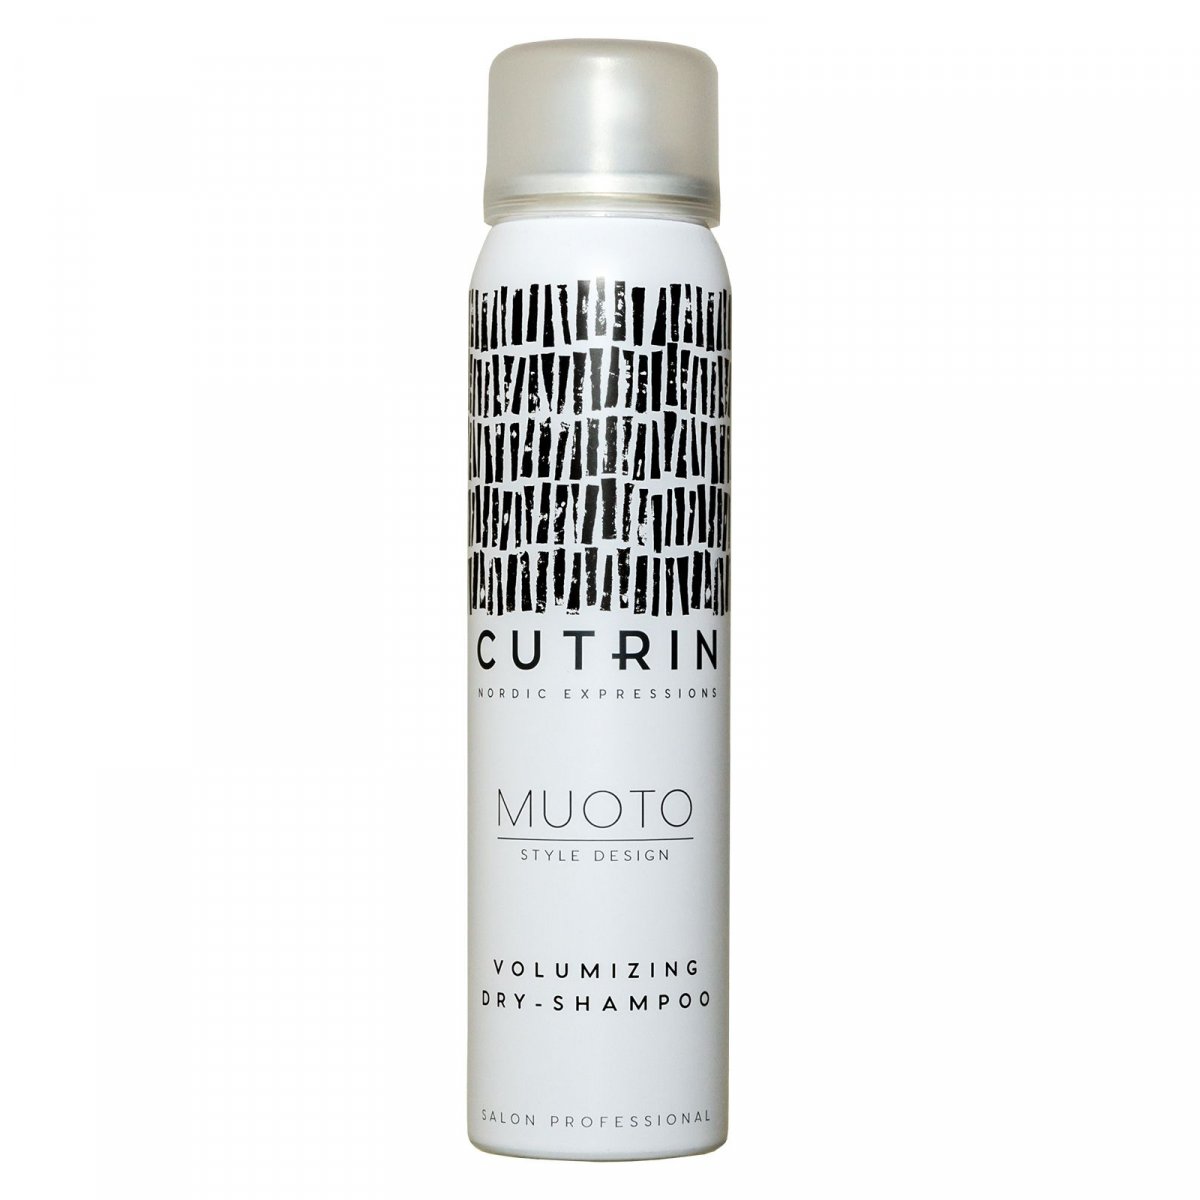 Cutrin Muoto Volumizing Dry Shampoo - Сухой шампунь для объема 100 мл Cutrin (Финляндия) купить по цене 633 руб.